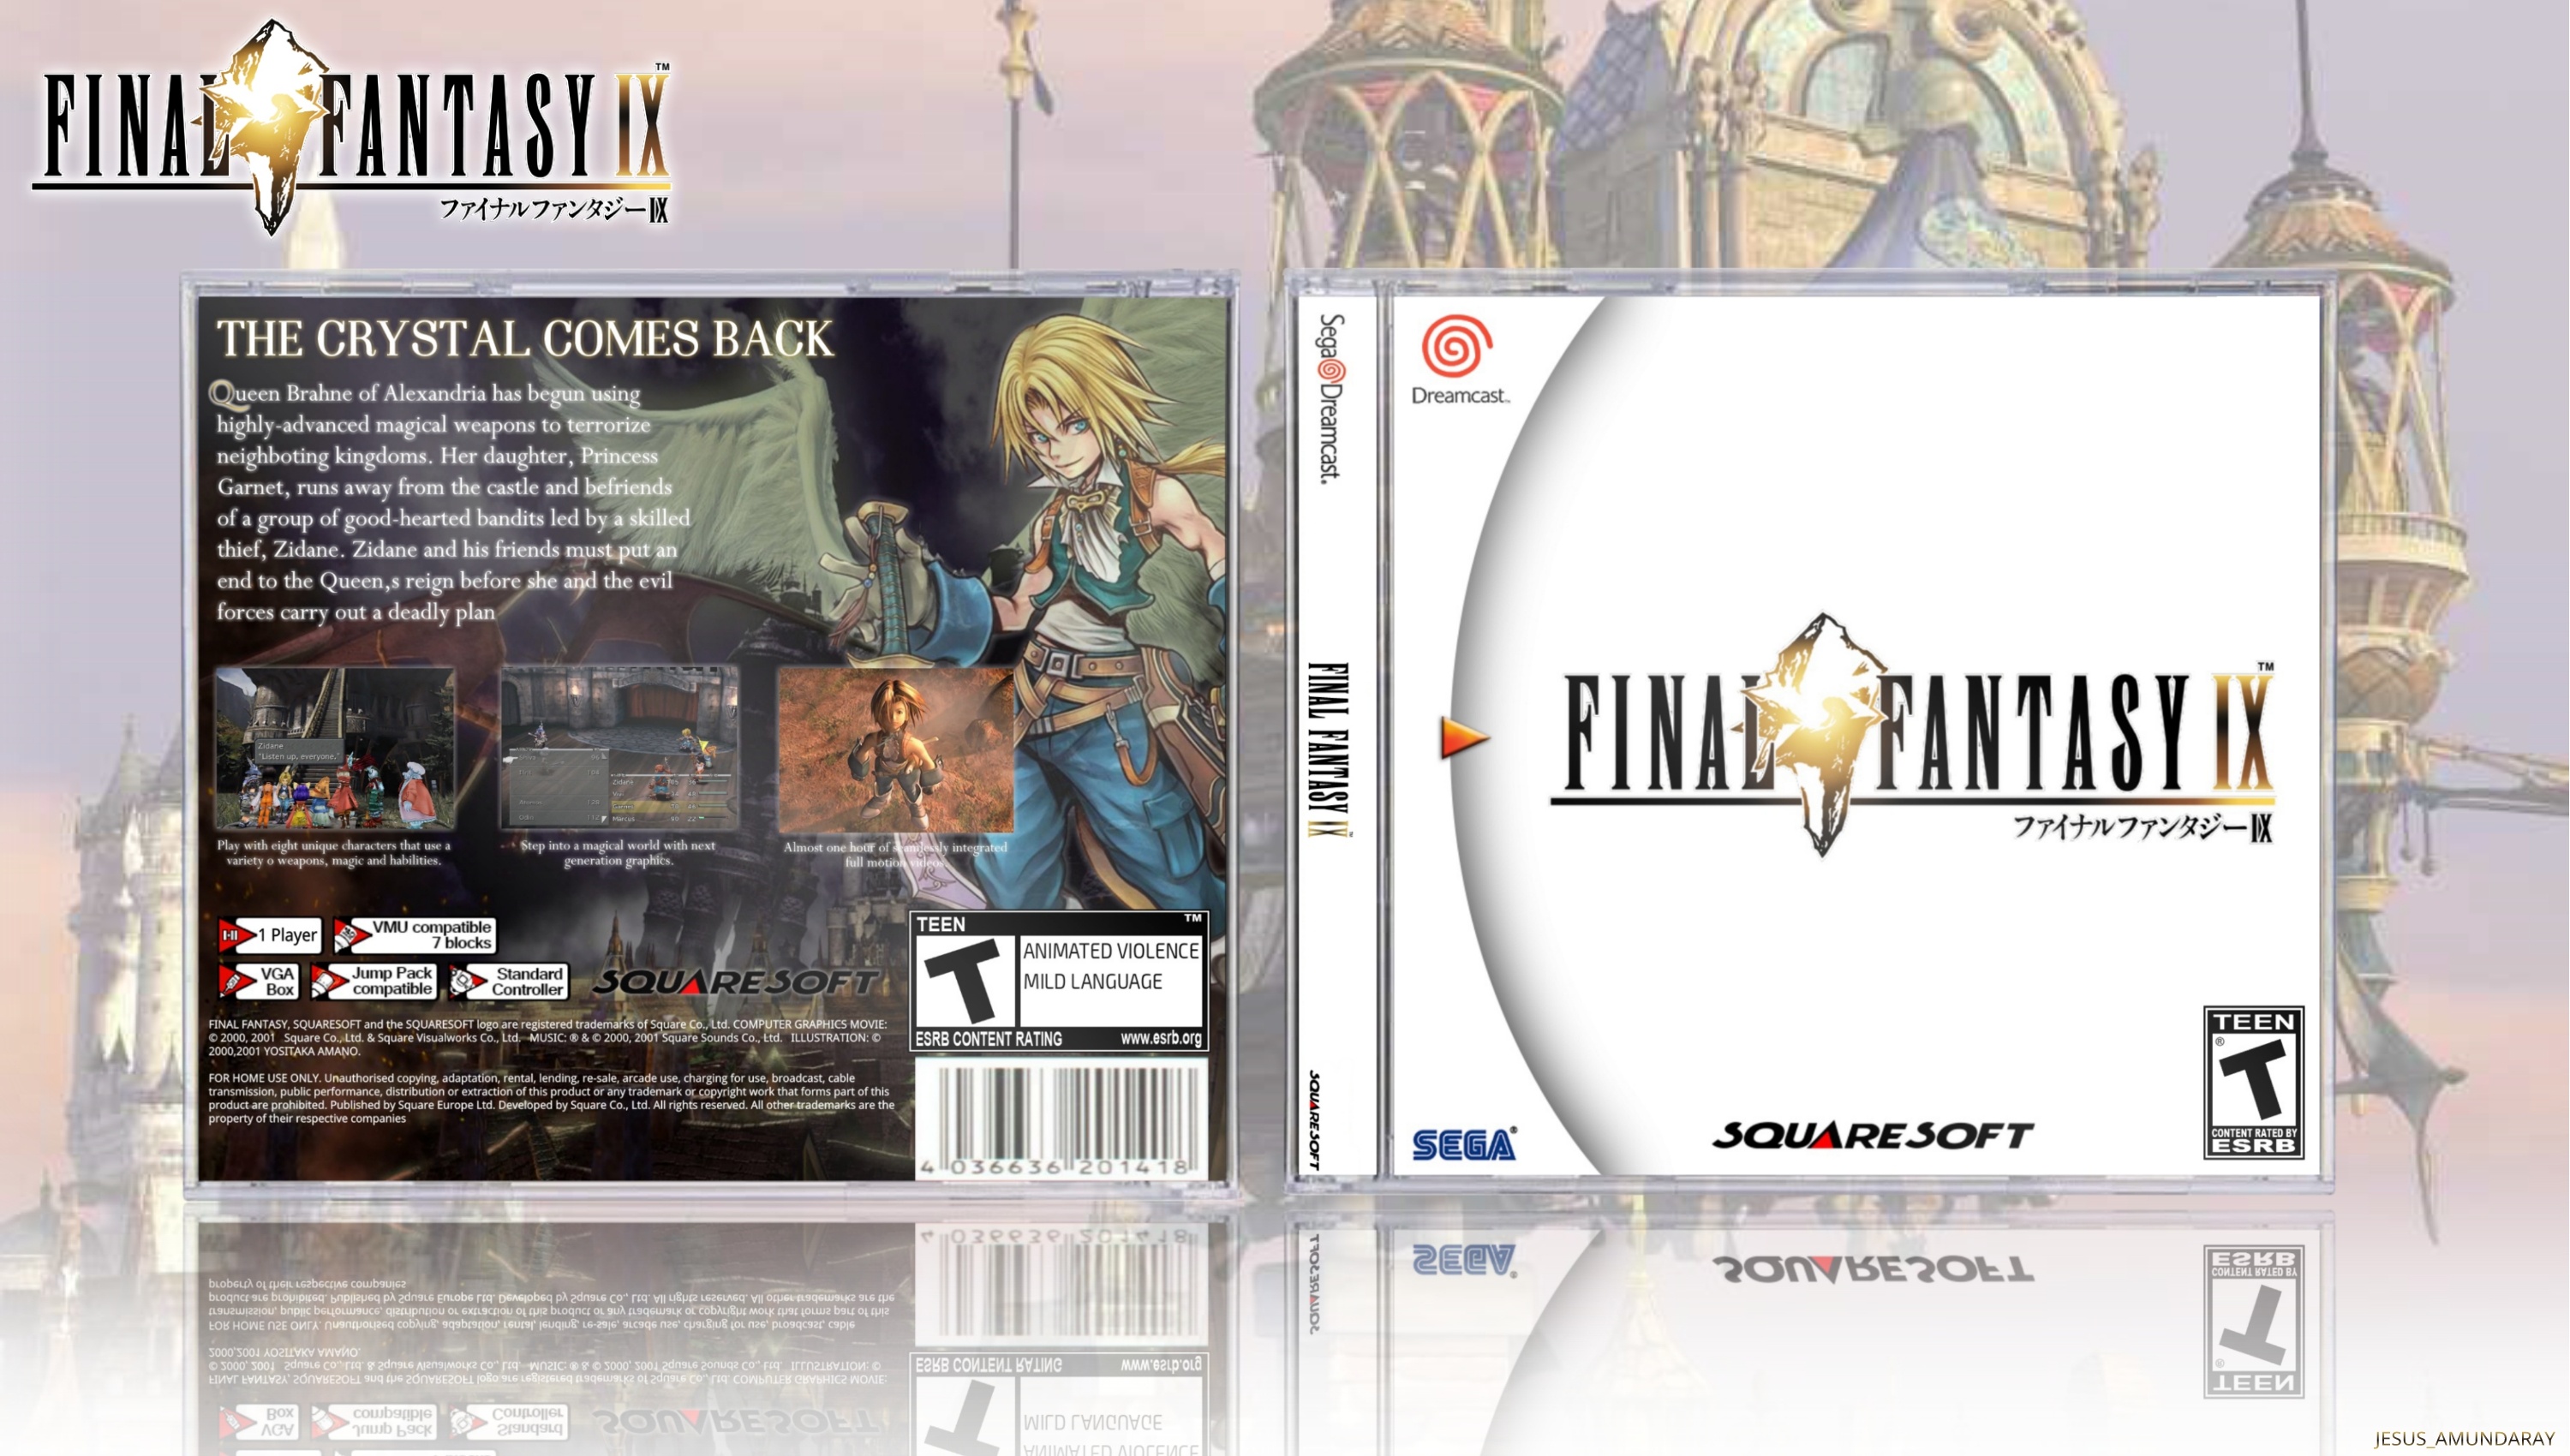 Final Fantasy IX Dreamcast box cover